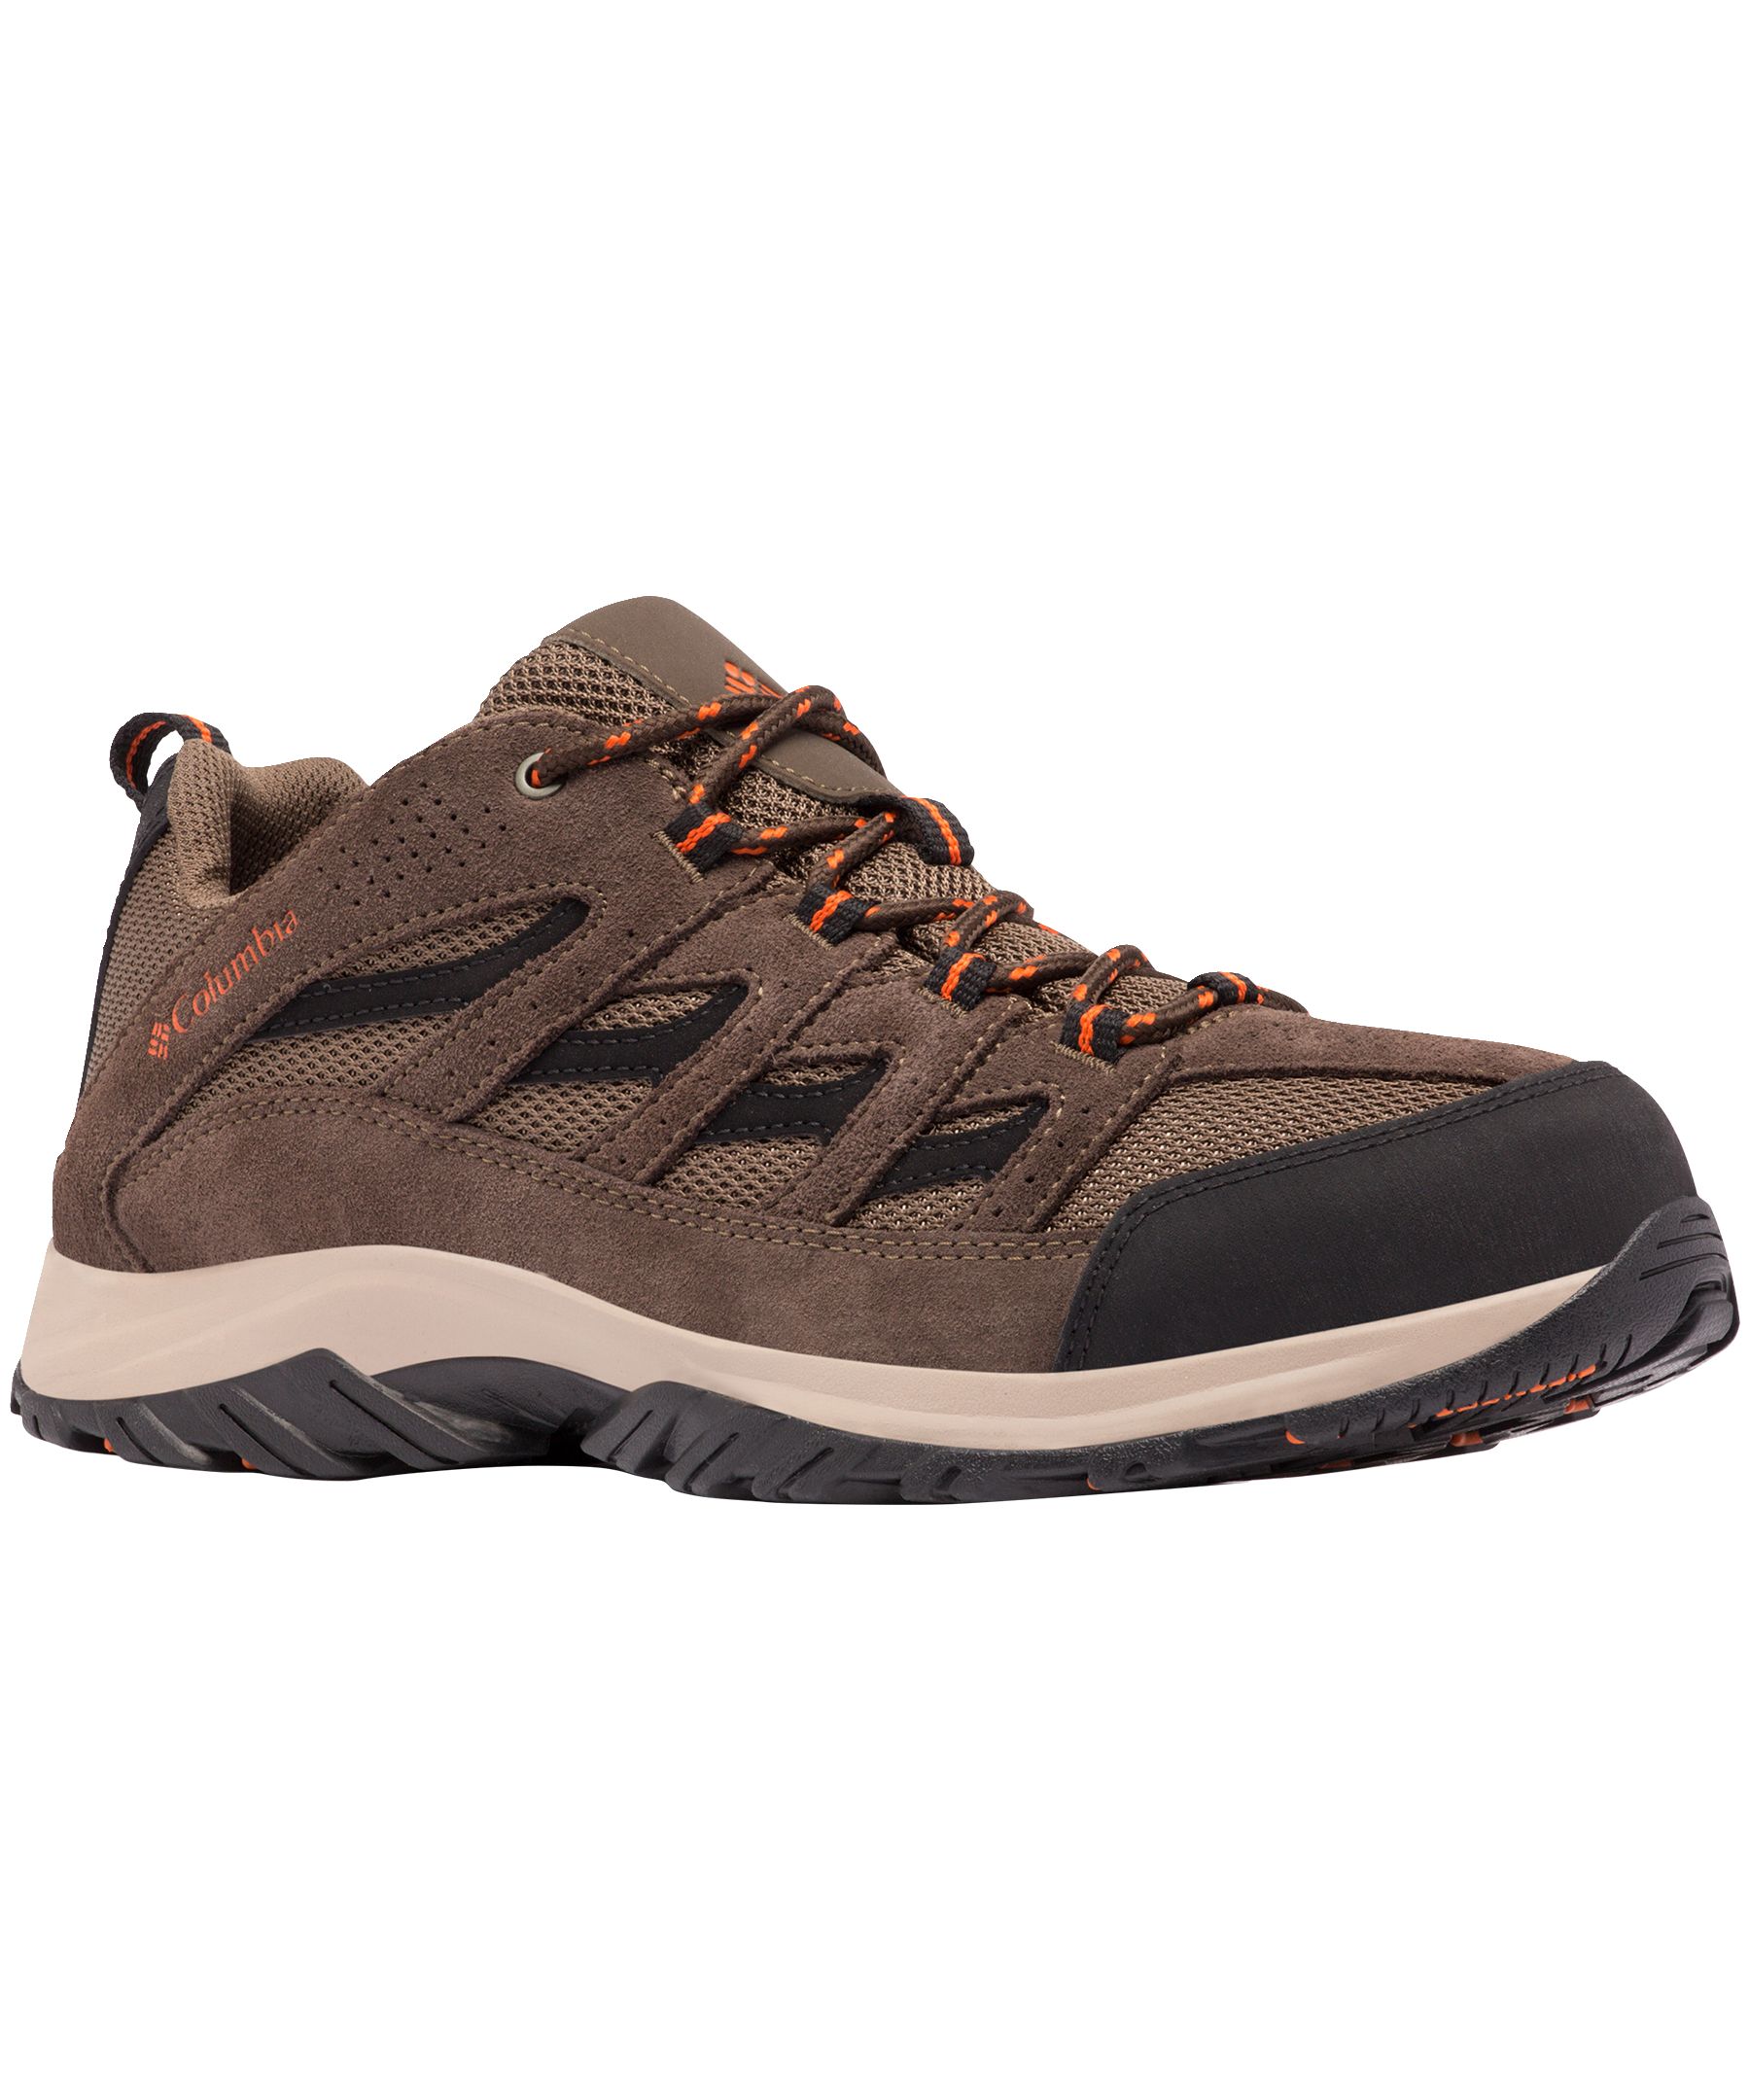 Merrell Men's Alverstone Waterproof Wide Hiking Boots - Earth/Espresso